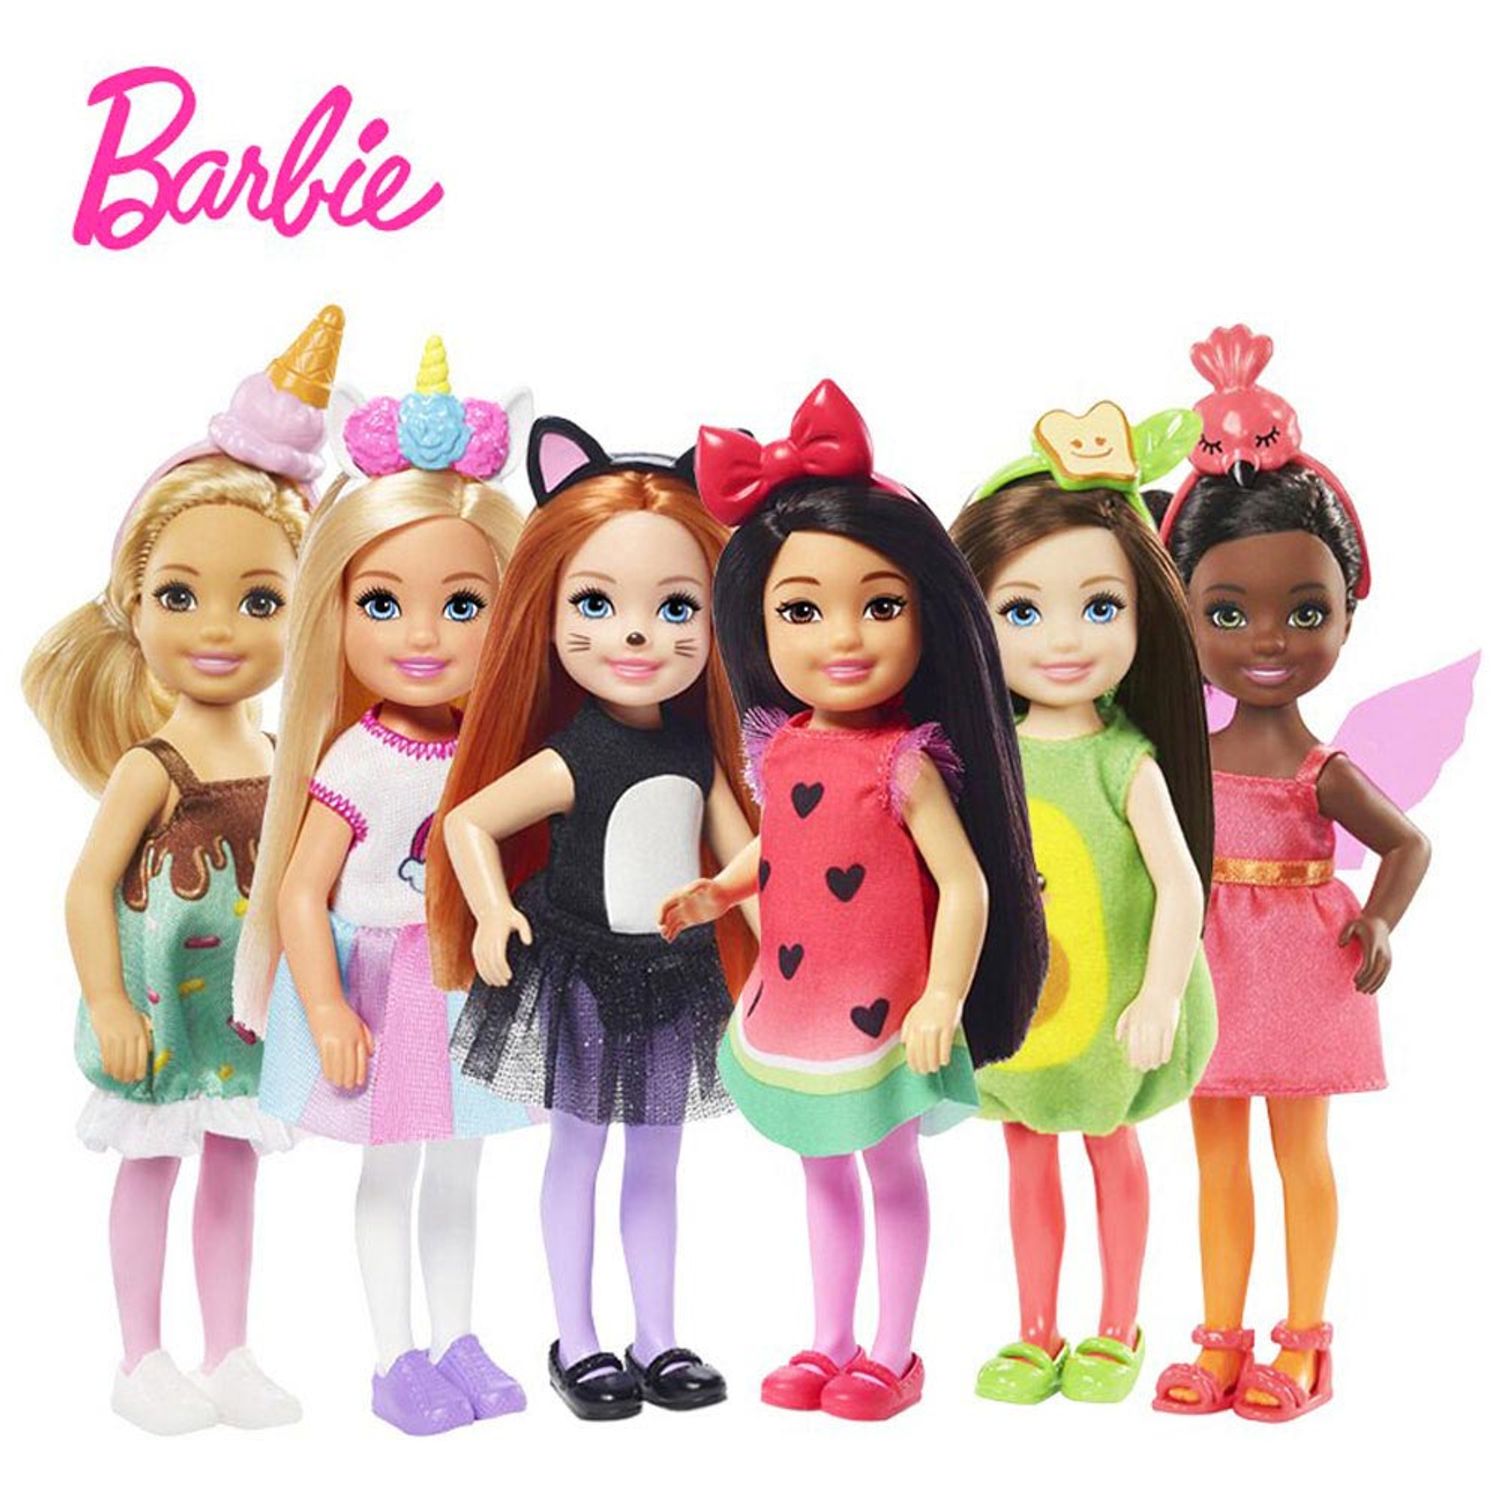 Disfraz caja Barbie 3D para mujer